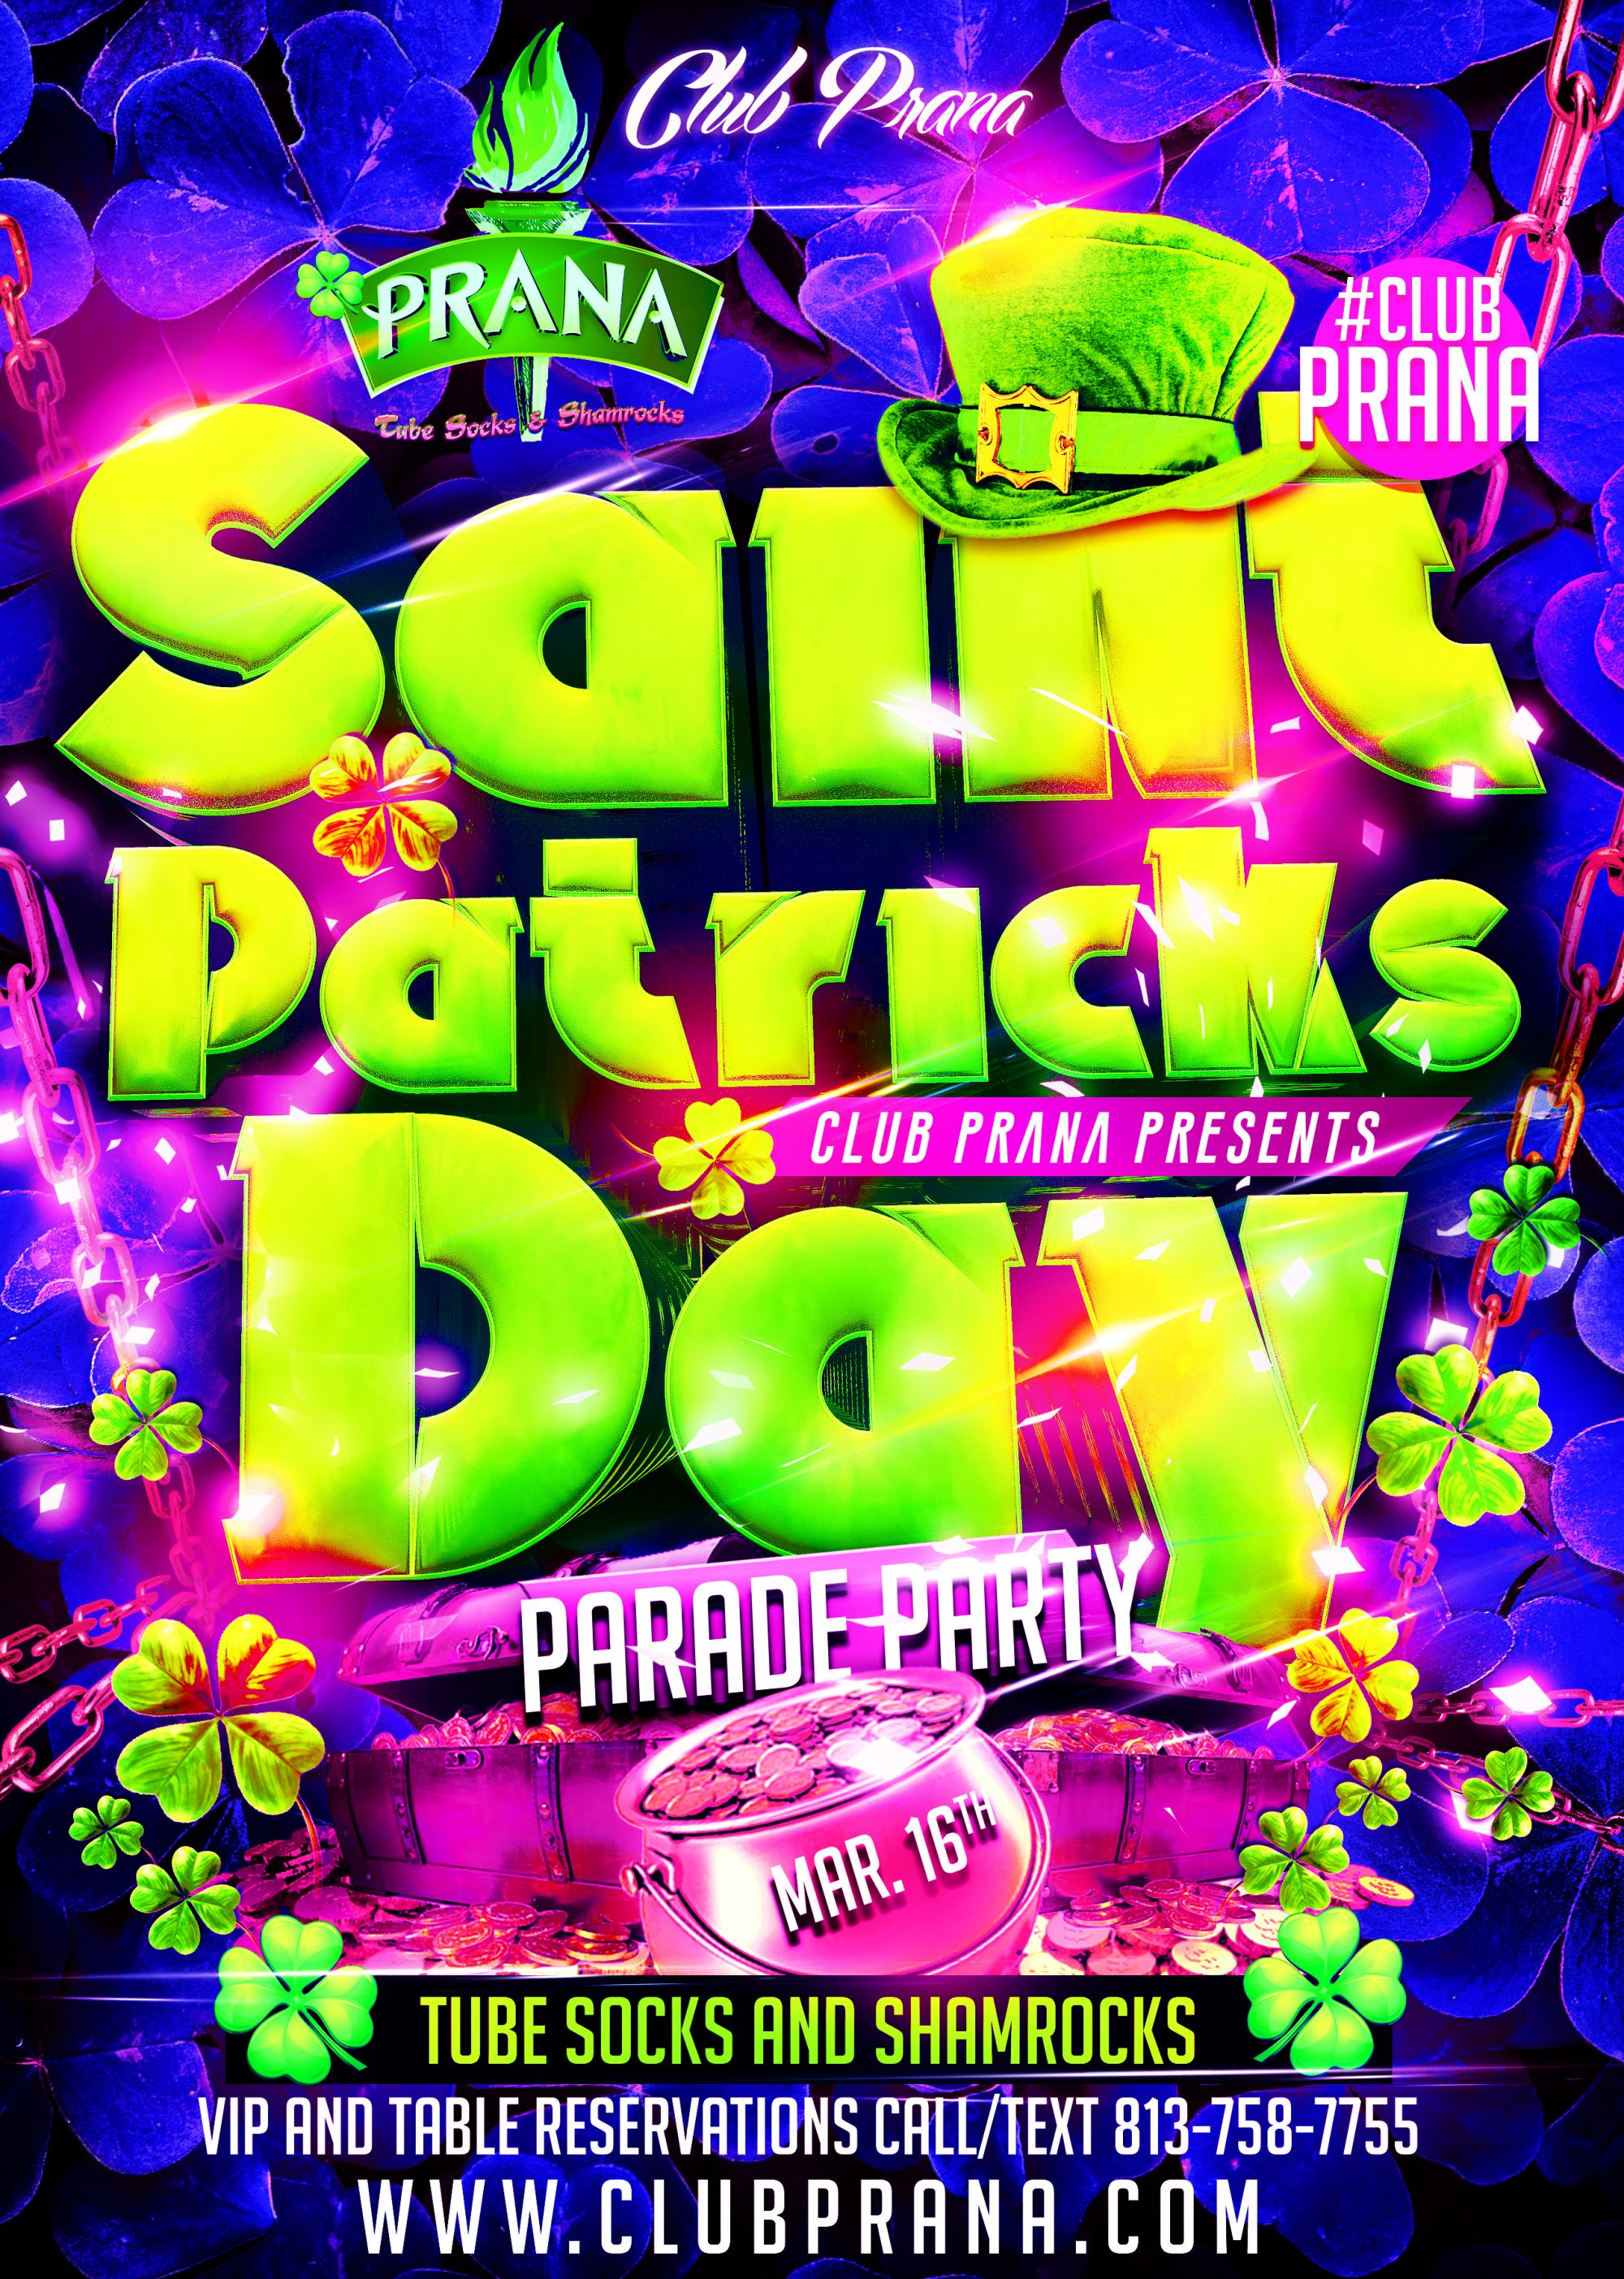 Saint Patrick’s Day Parade Party